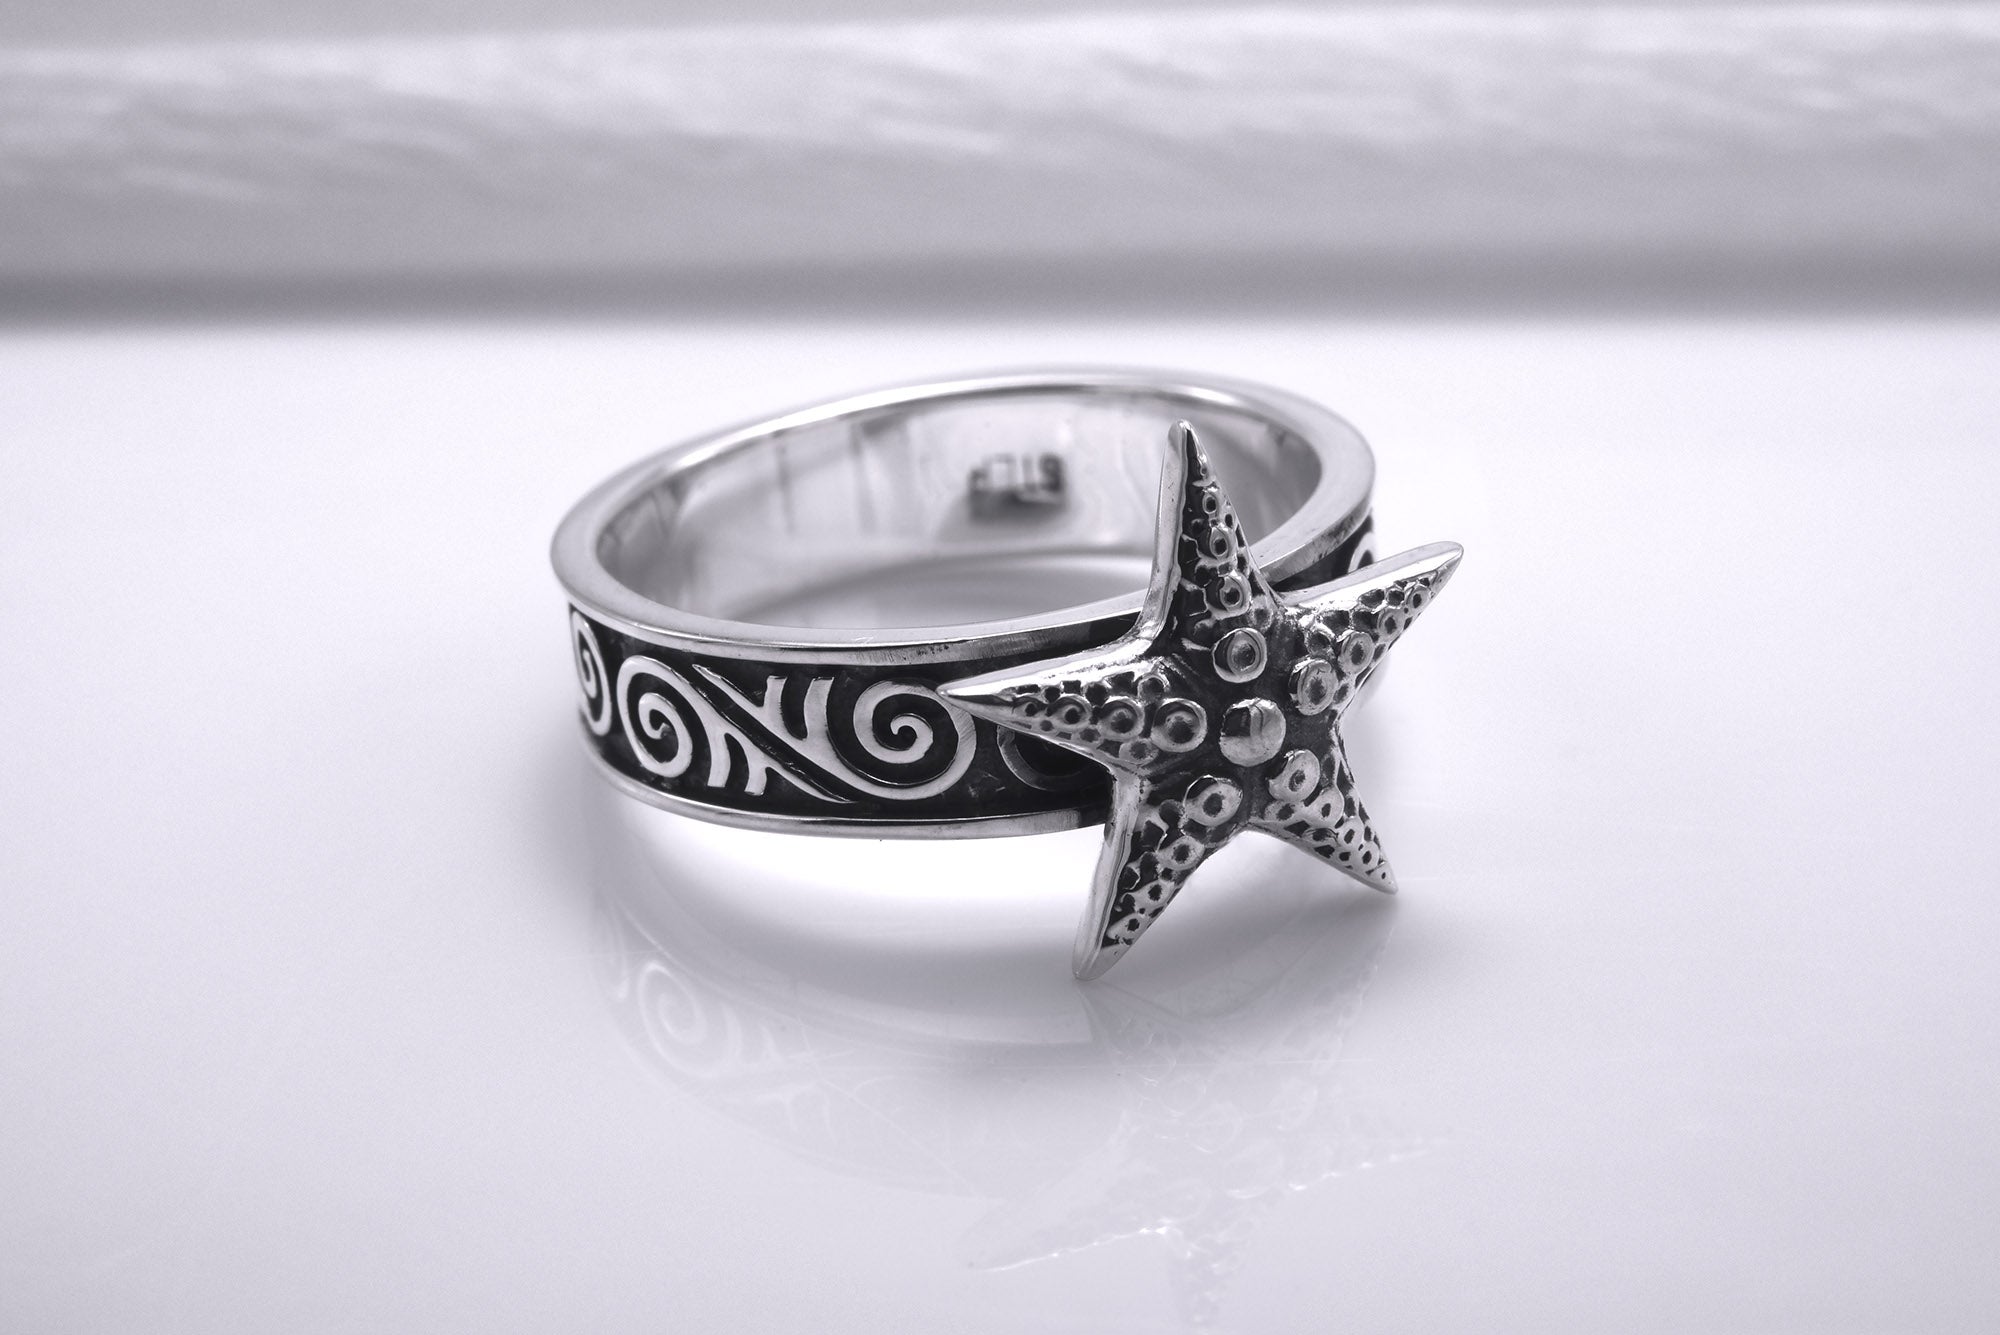 Sterling Silver Starfish Ring, Handmade Ocean Jewelry